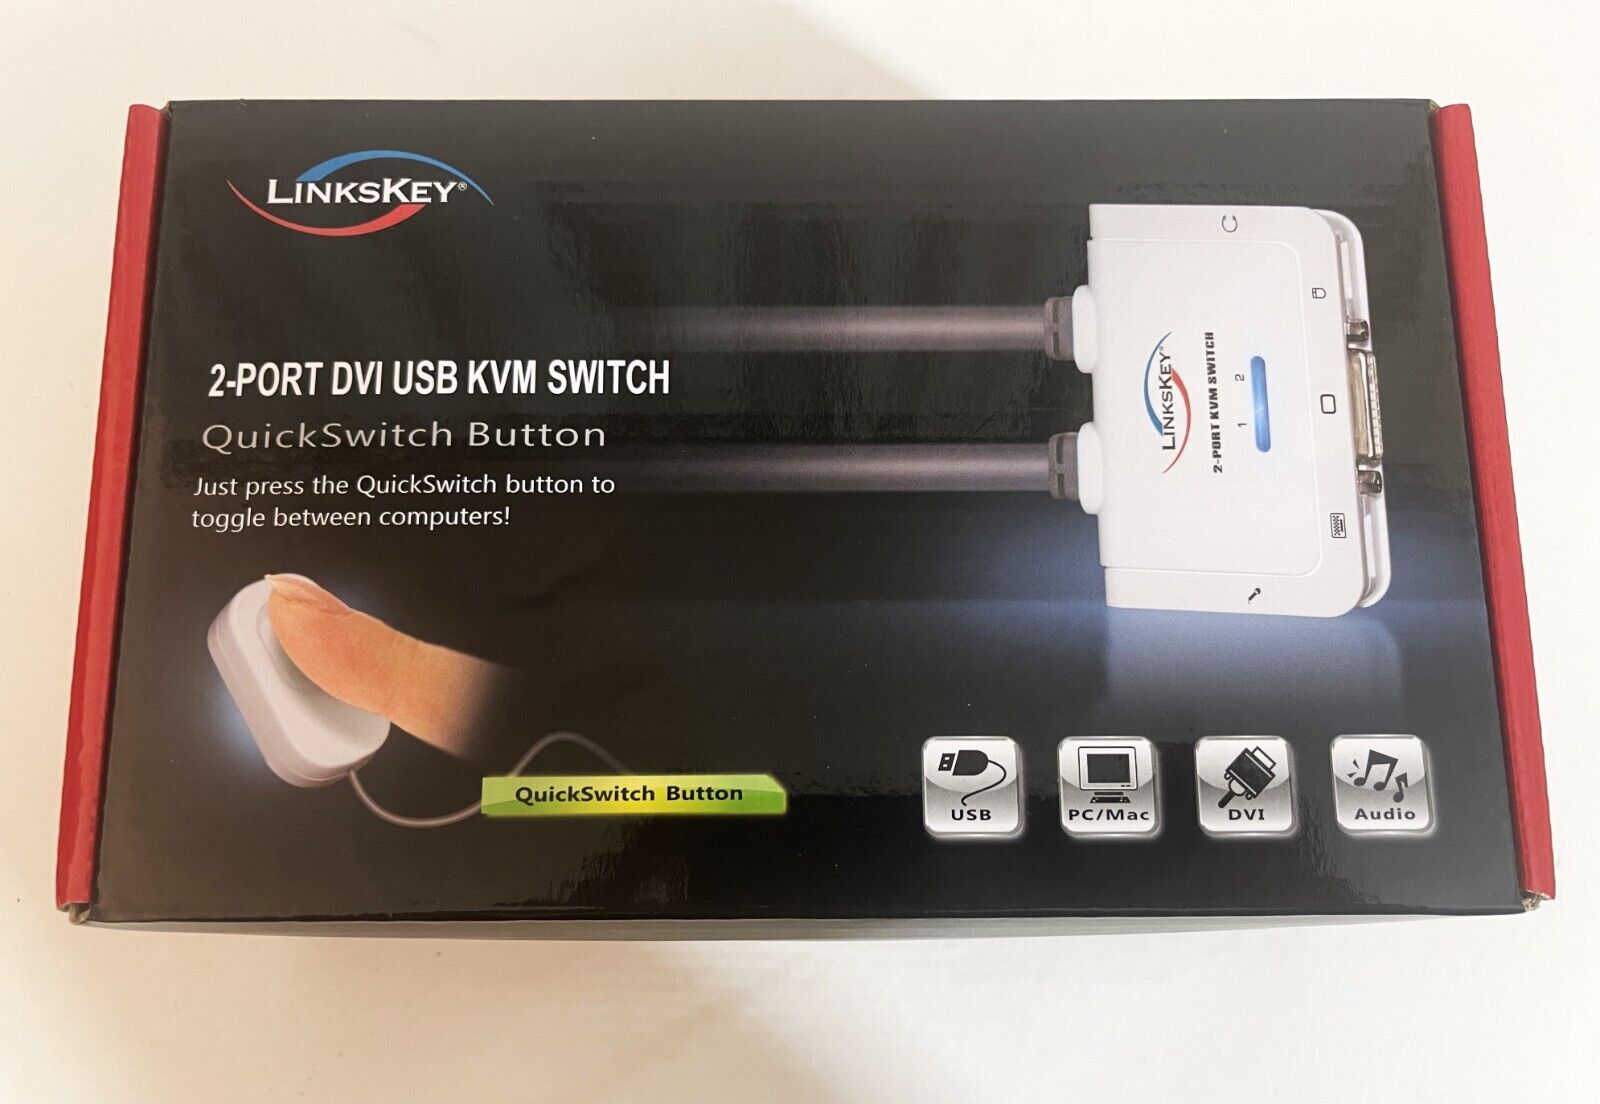 Linkskey 2 Port DVI USB KVM Switch with QuickSwitch Button